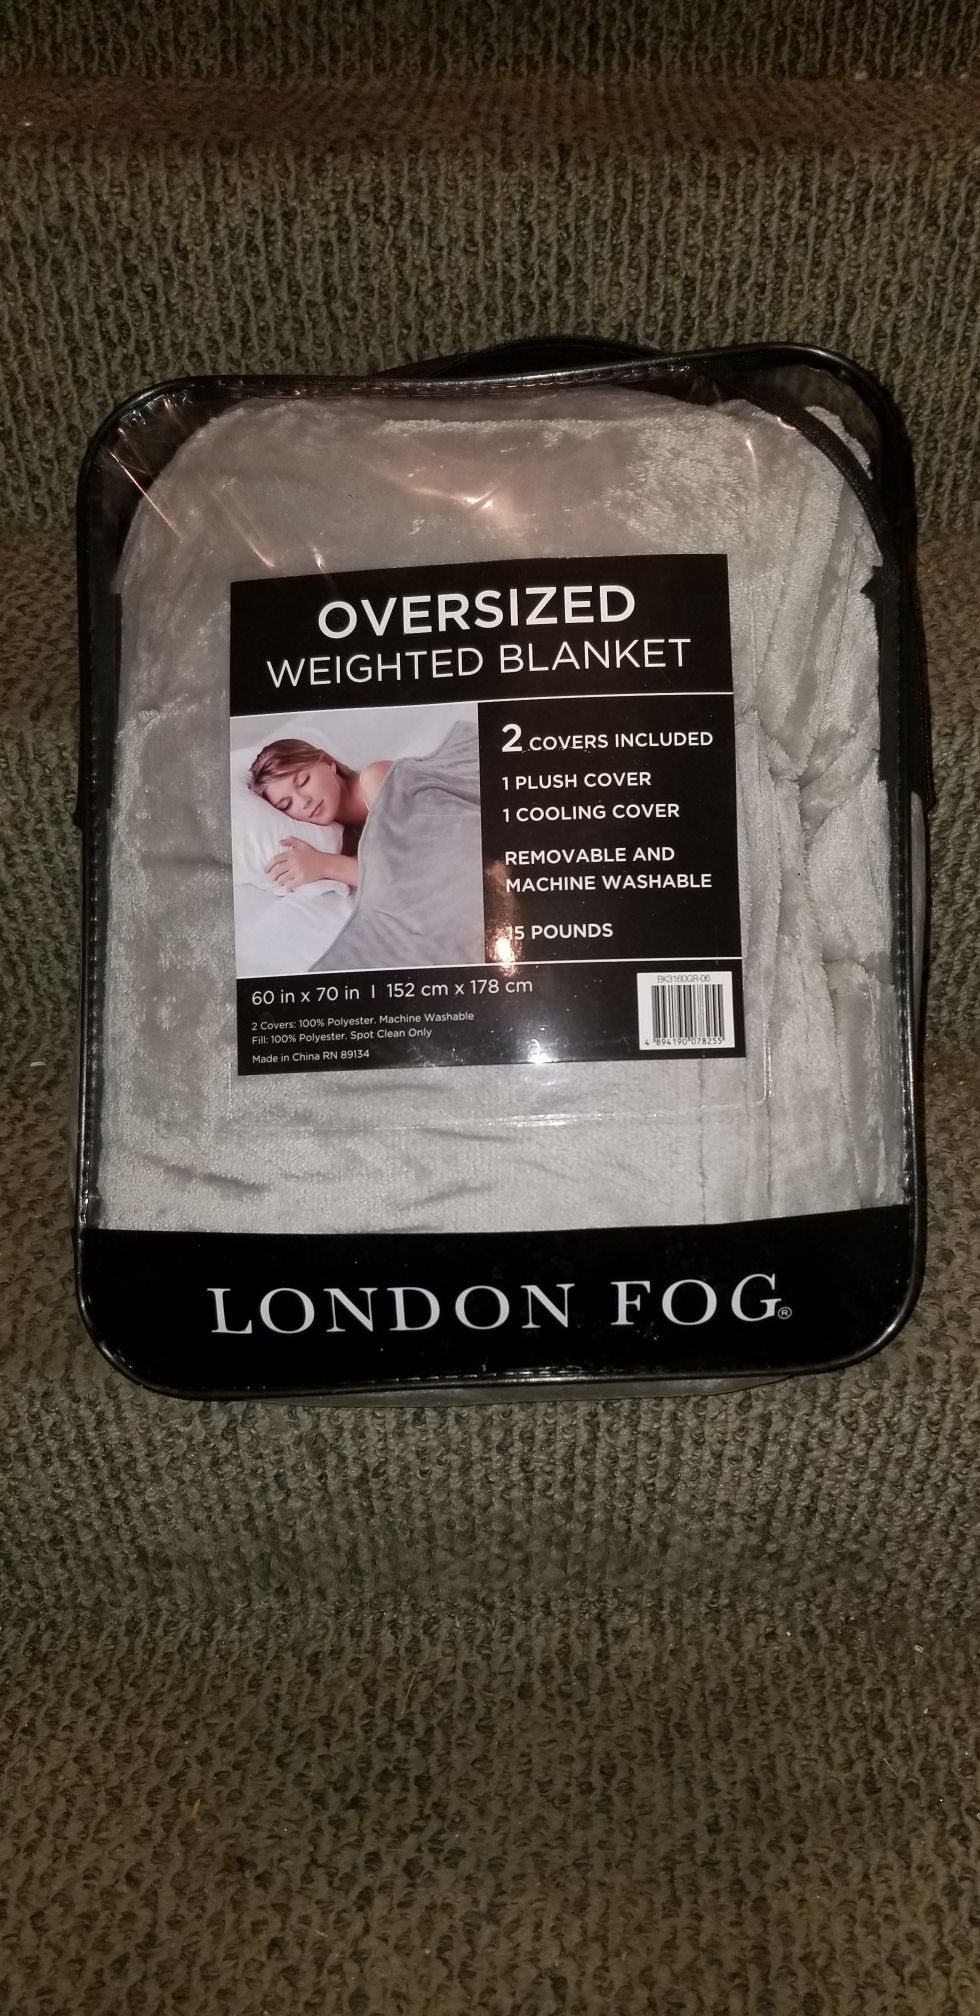 London Fog Oversized Weighted Blanket